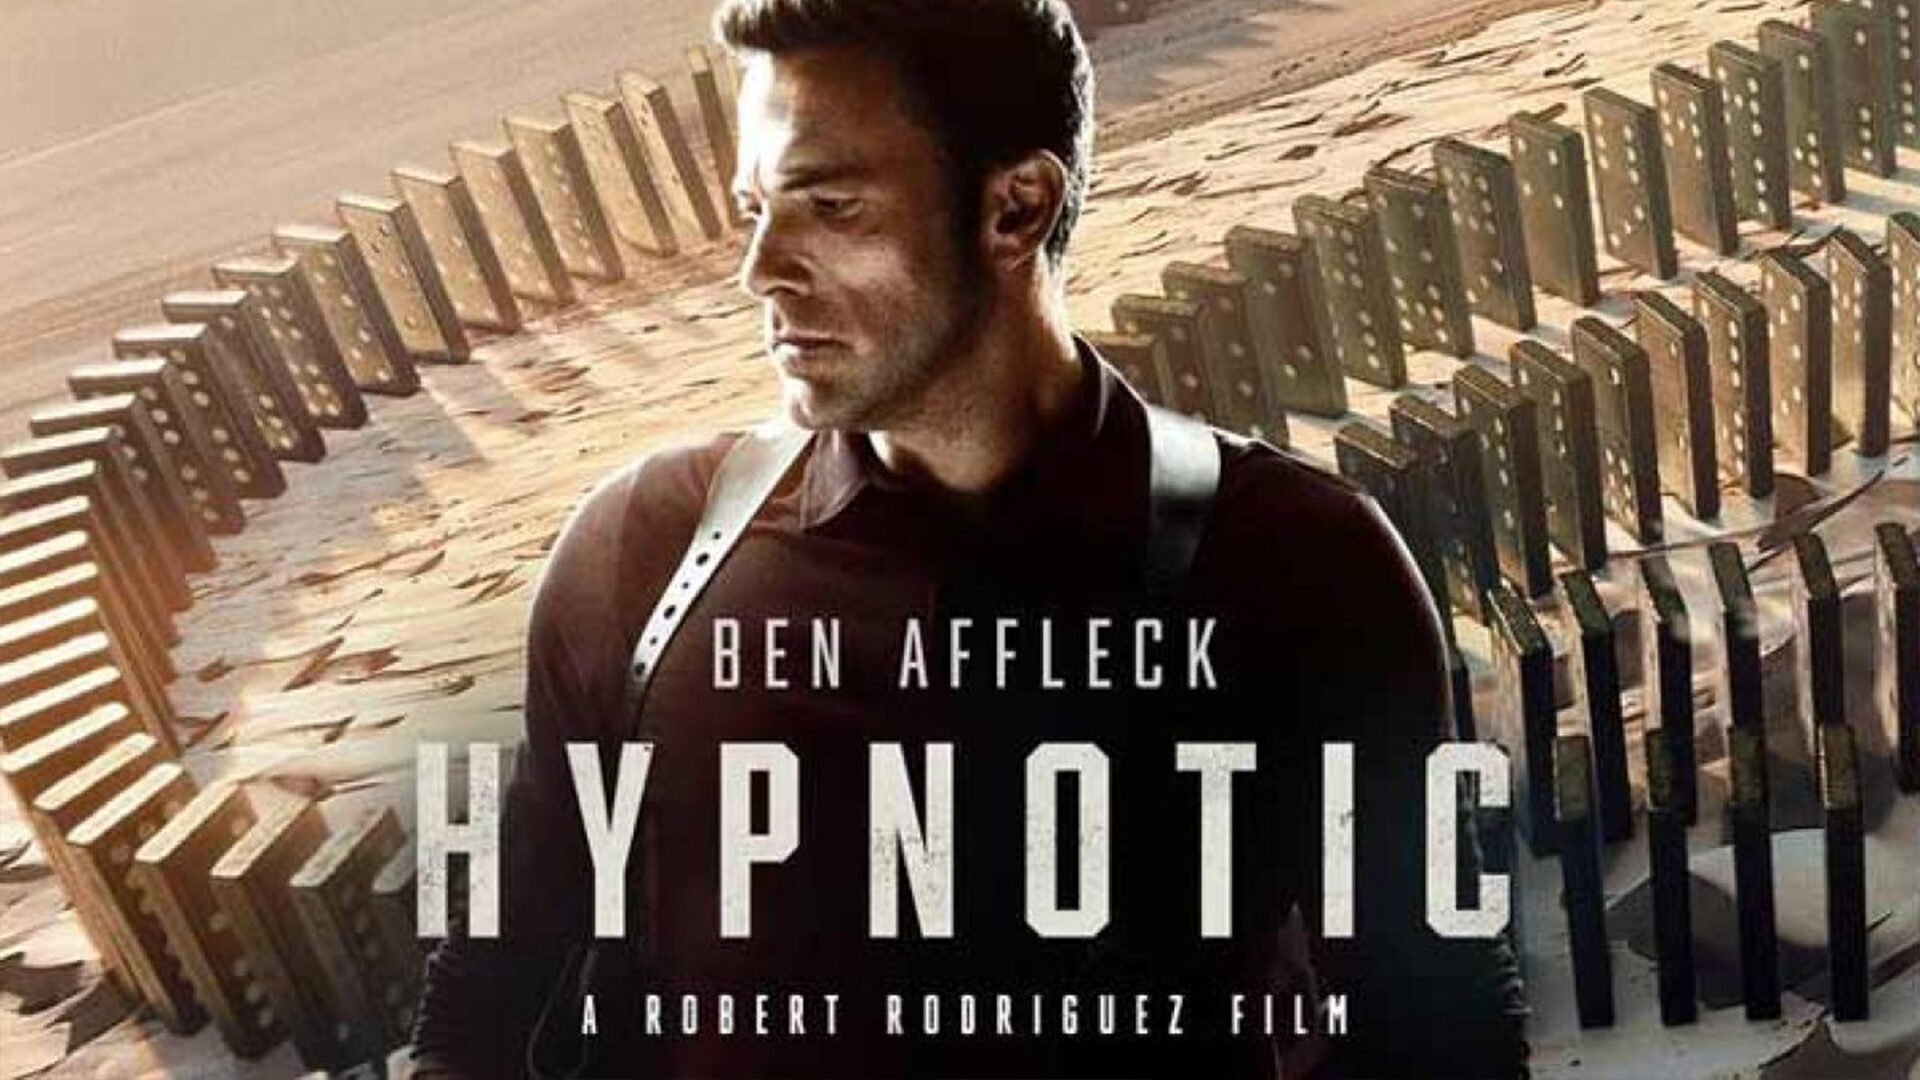 Silver Screening: Hypnotic